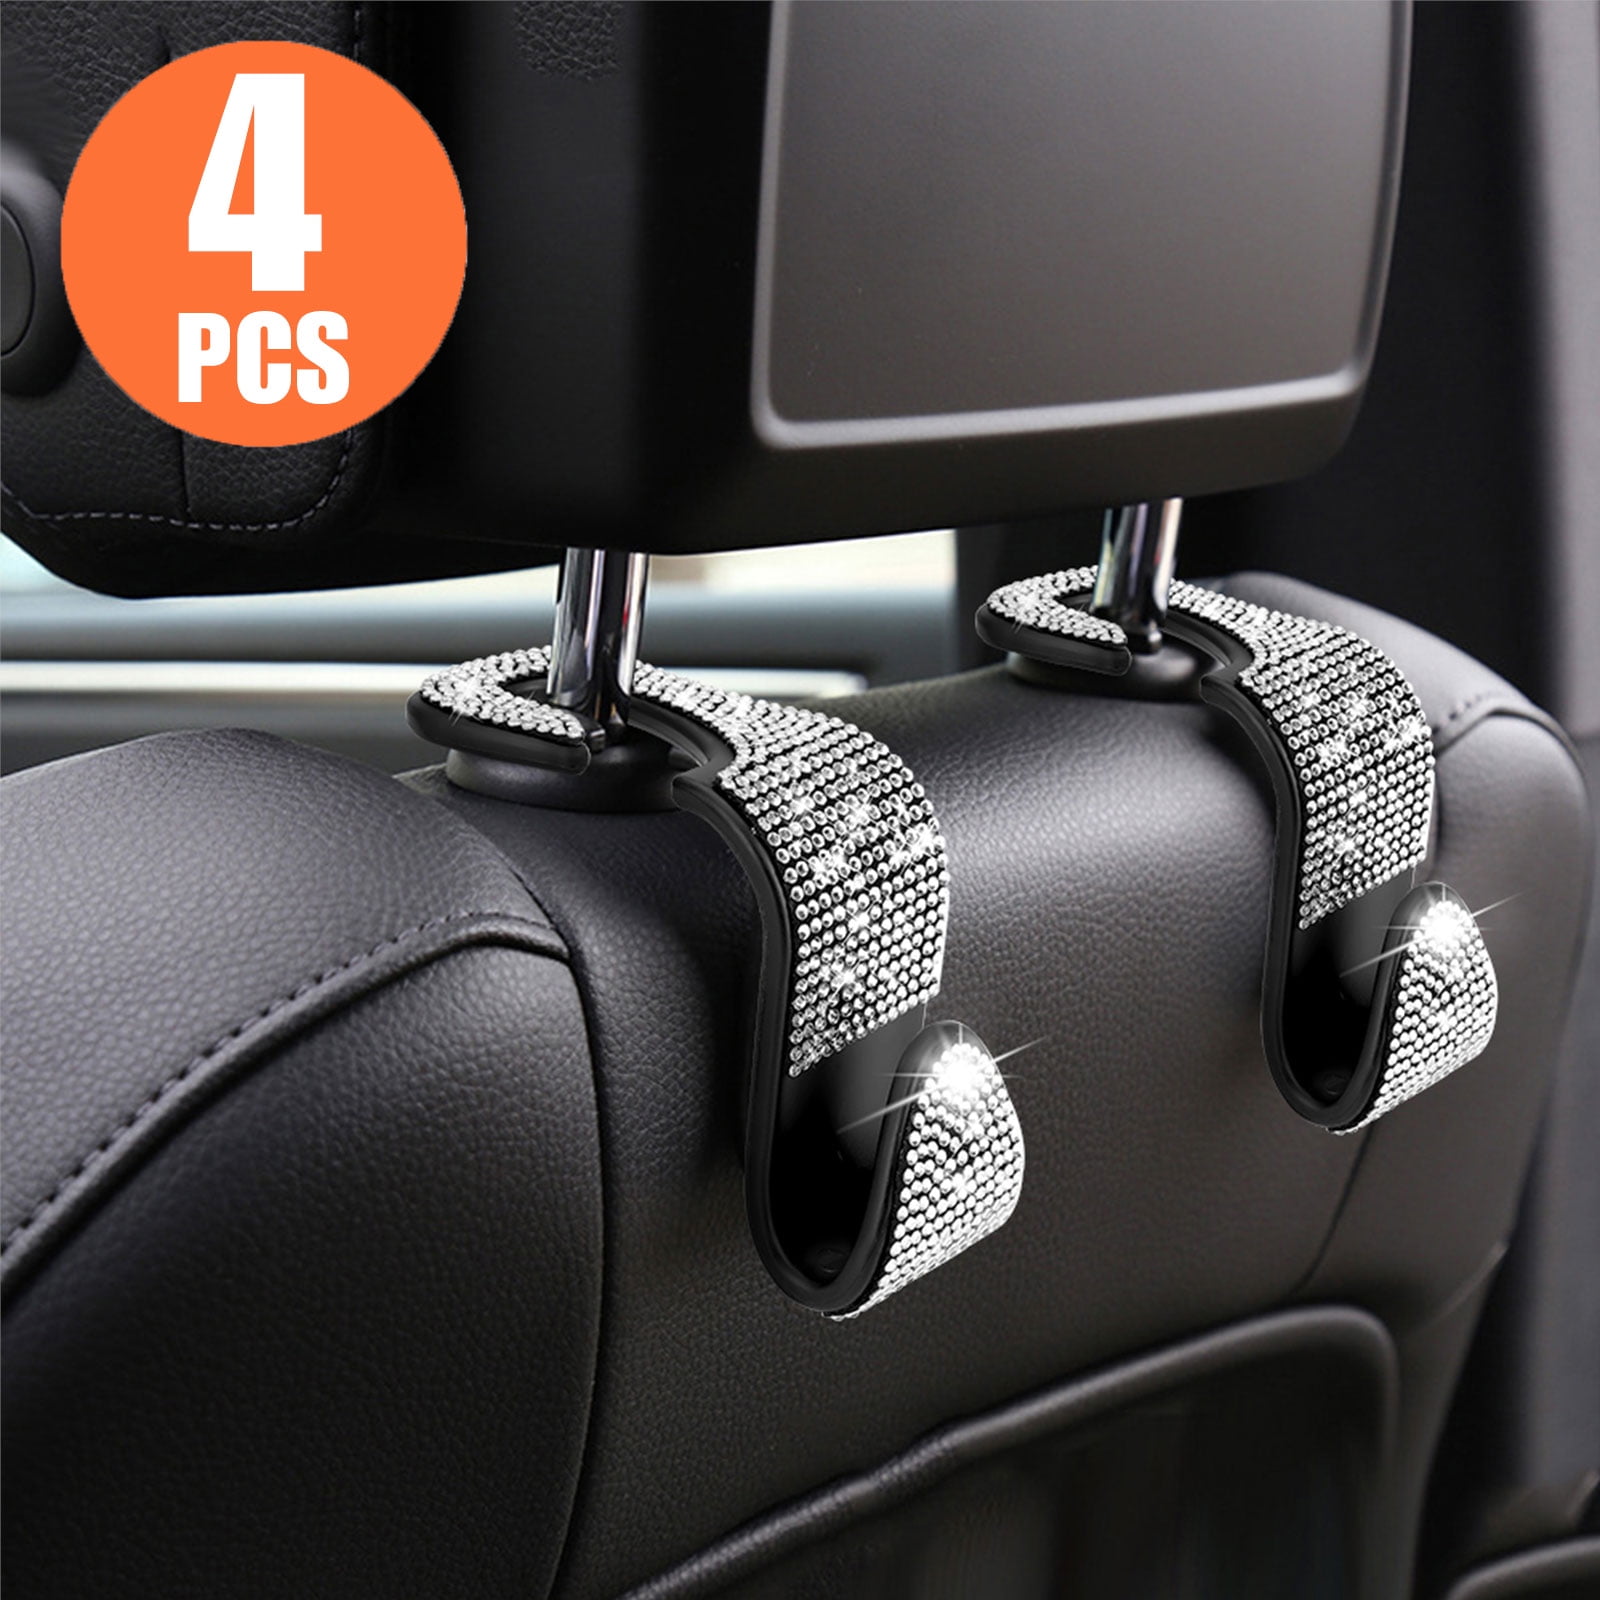 4 PCS Car Hooks Car Hangers Seat Headrest Hooks Universal Backseat Hanger Back Seat Holder for Bag Purse Cloth Groceries Coat Black Shinning Cover 